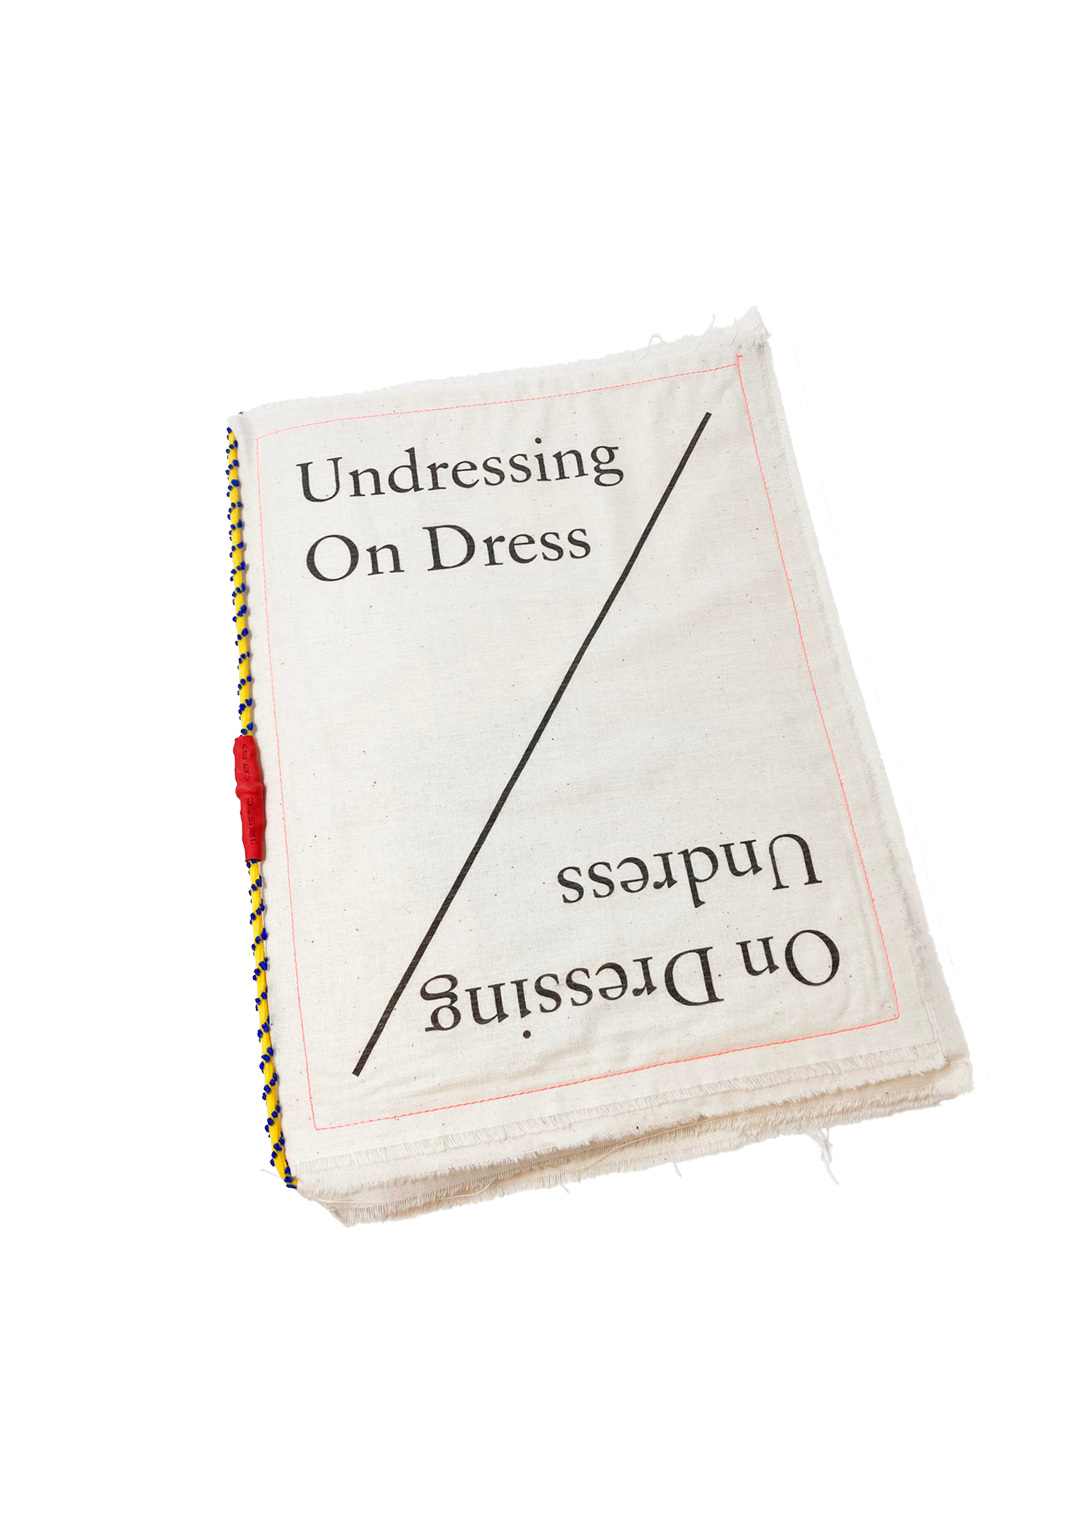 Undressing On Dress/On Dressing Undress